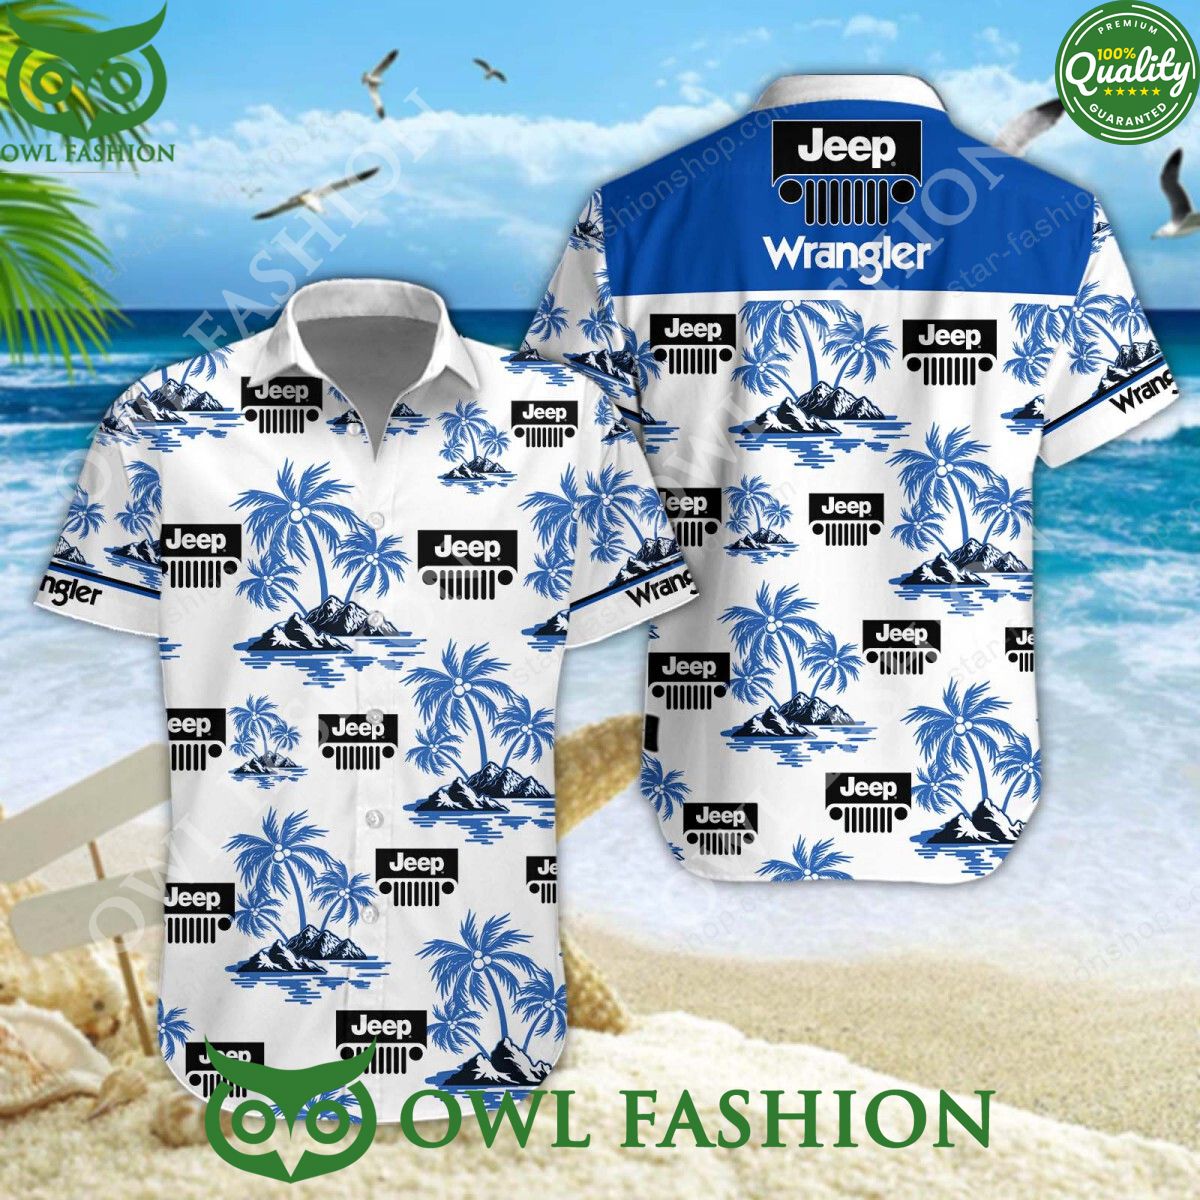 jeep wrangler iconic automobile marque hawaiian shirt and shorts 1 BXKoL.jpg